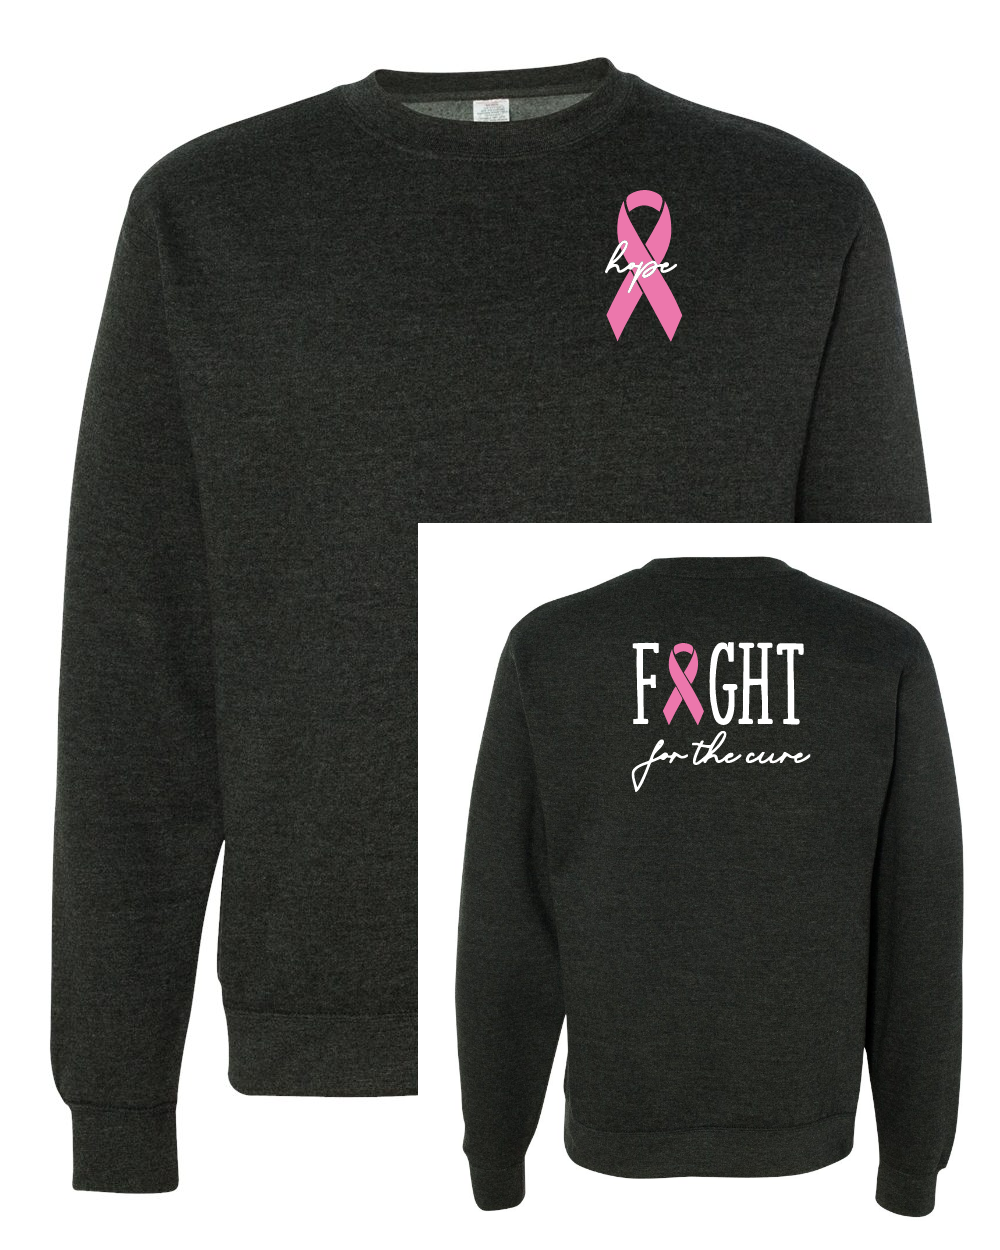 Lowe's "Fight For The Cure" Sweatshirt